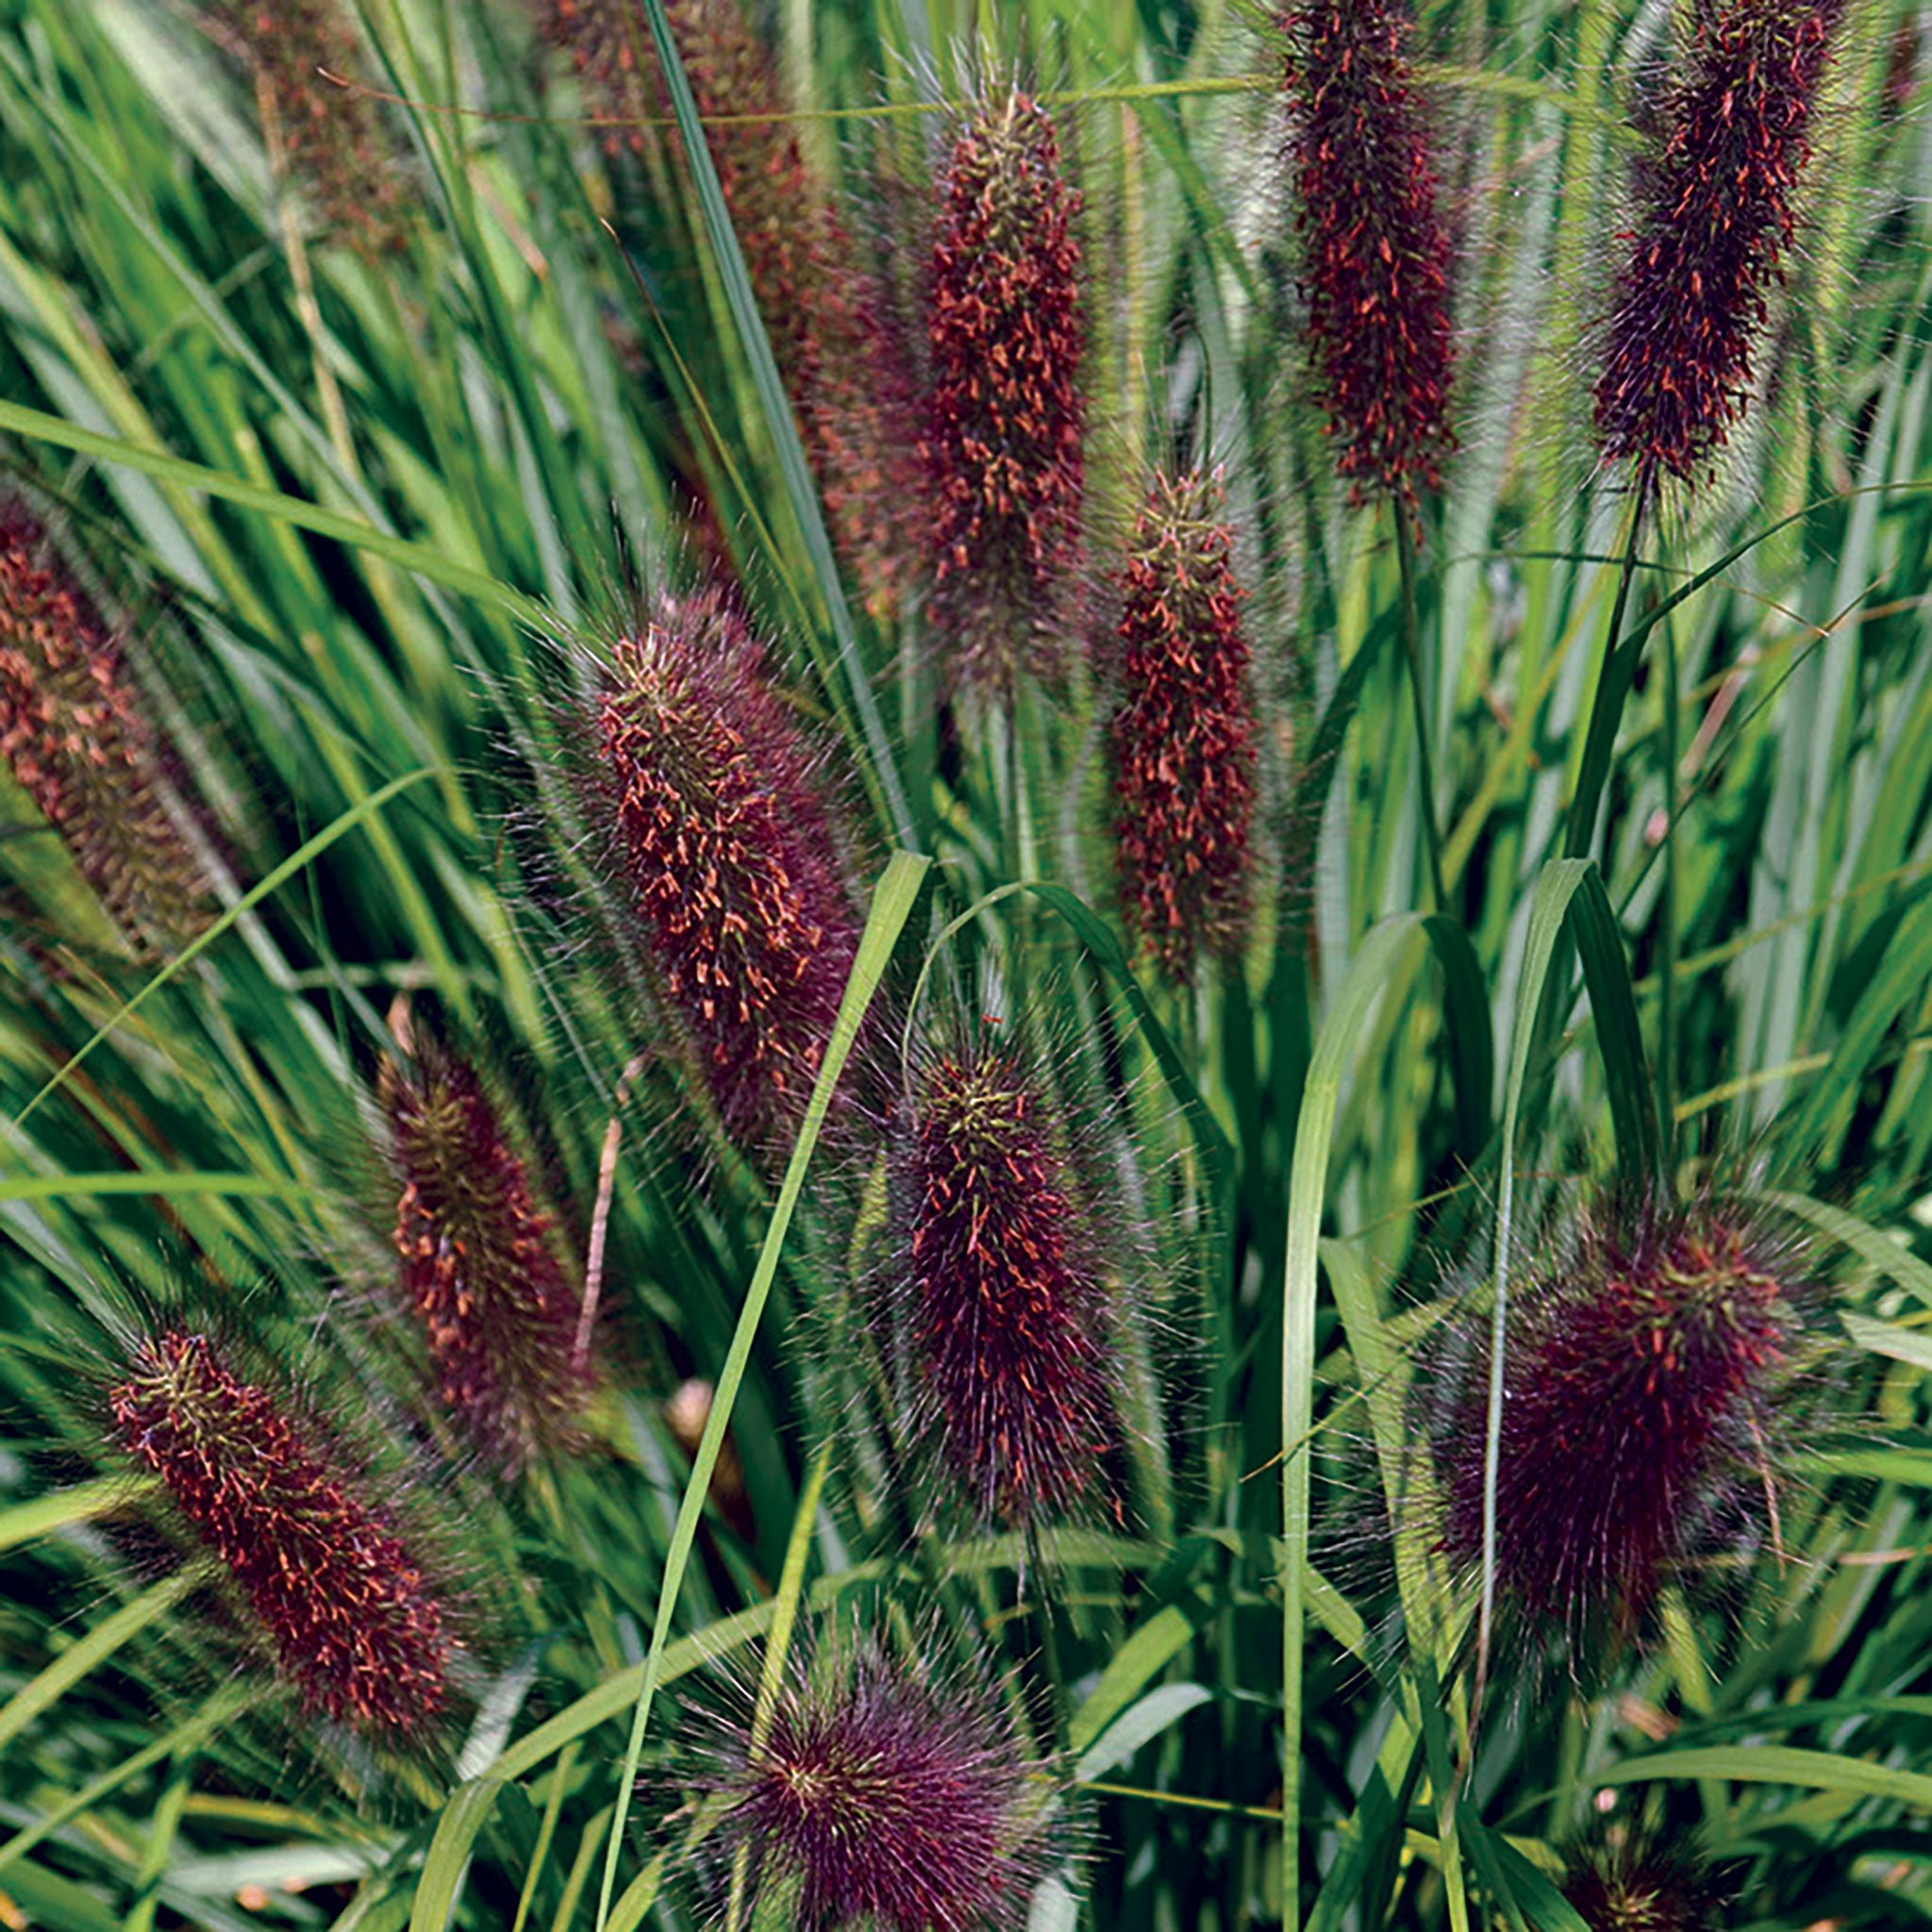 Unwins Ornamental Grass Pennisetum Alopecuroides Viridescens Seeds